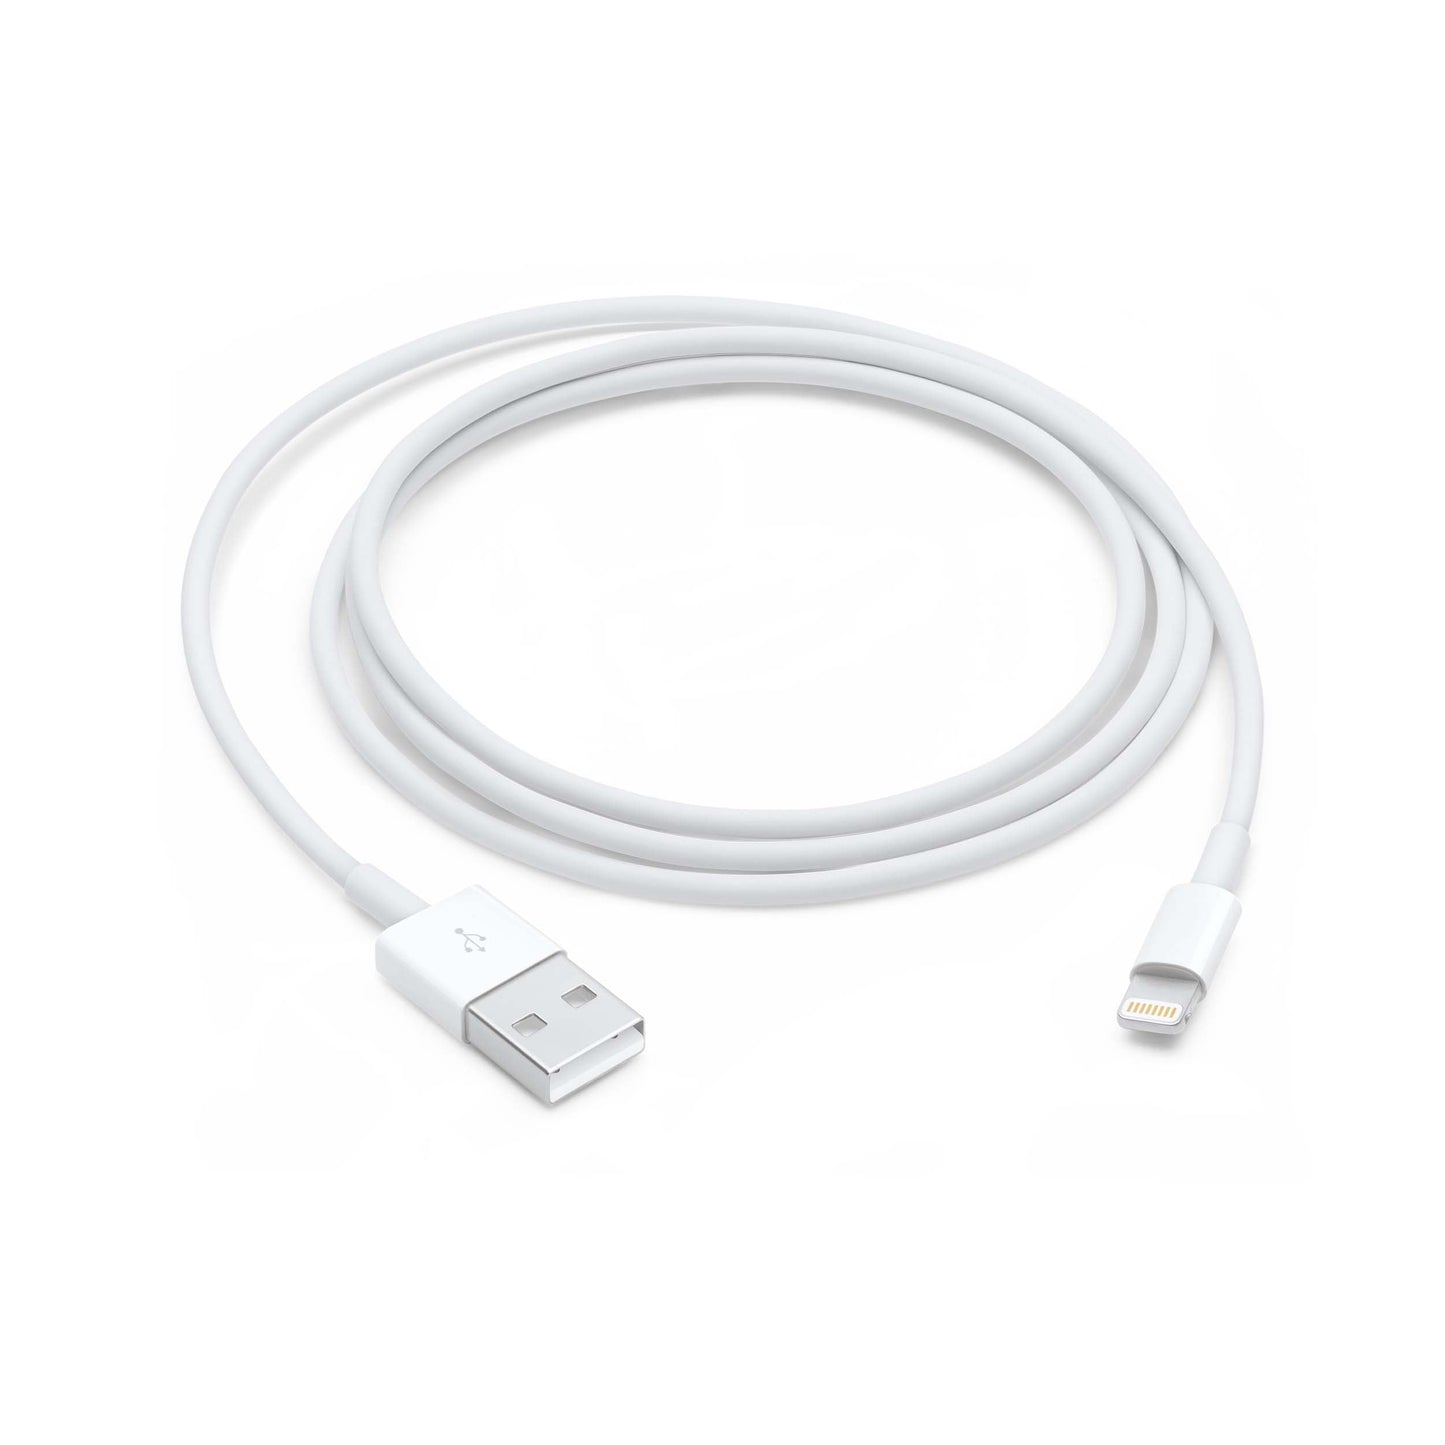 Cable Apple de conector Lightning a USB de 1M - Blanco